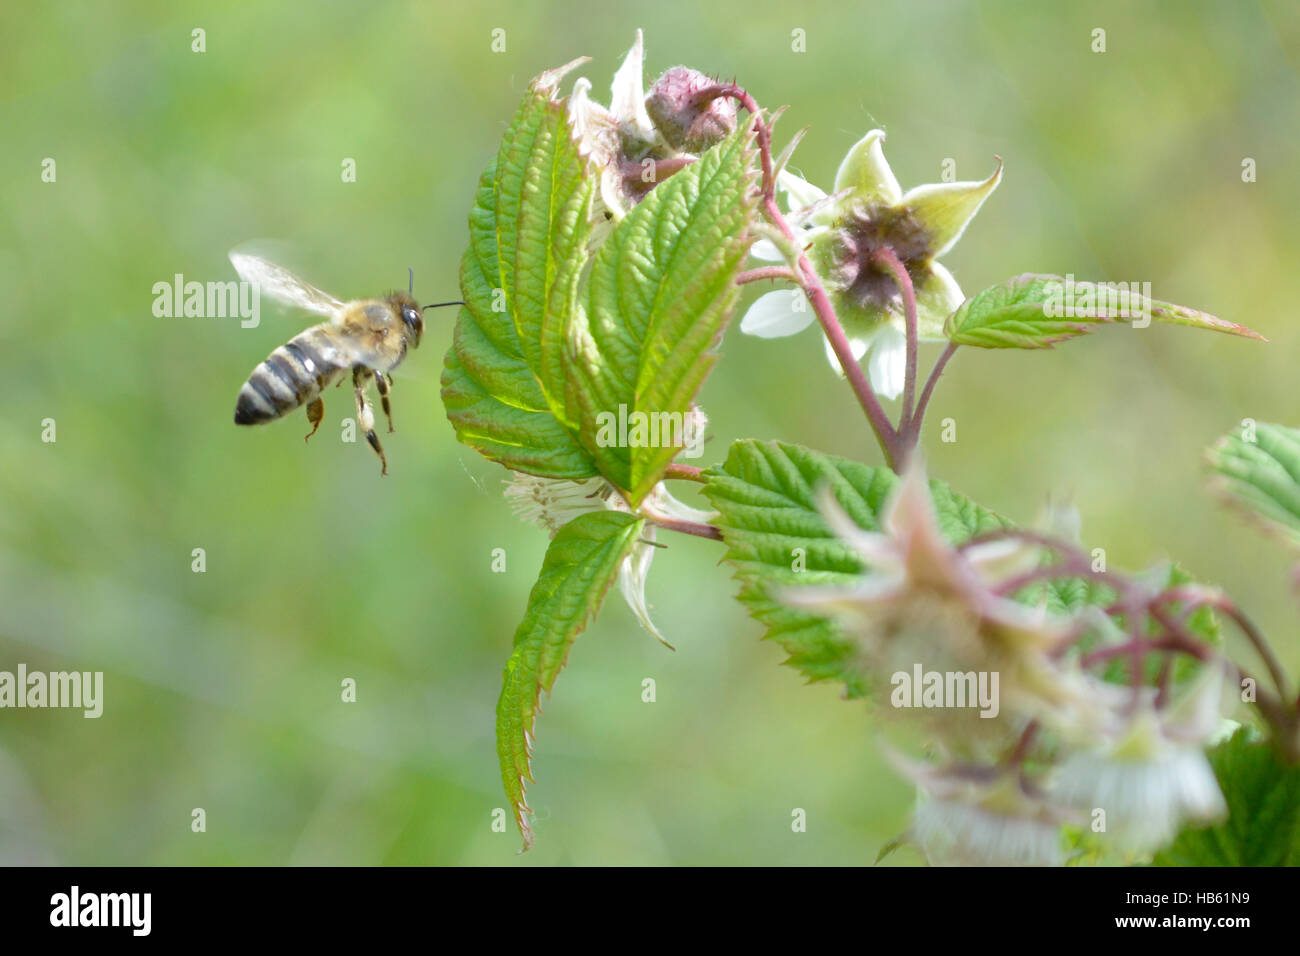 Honeybee flying to reach flower Stock Photo